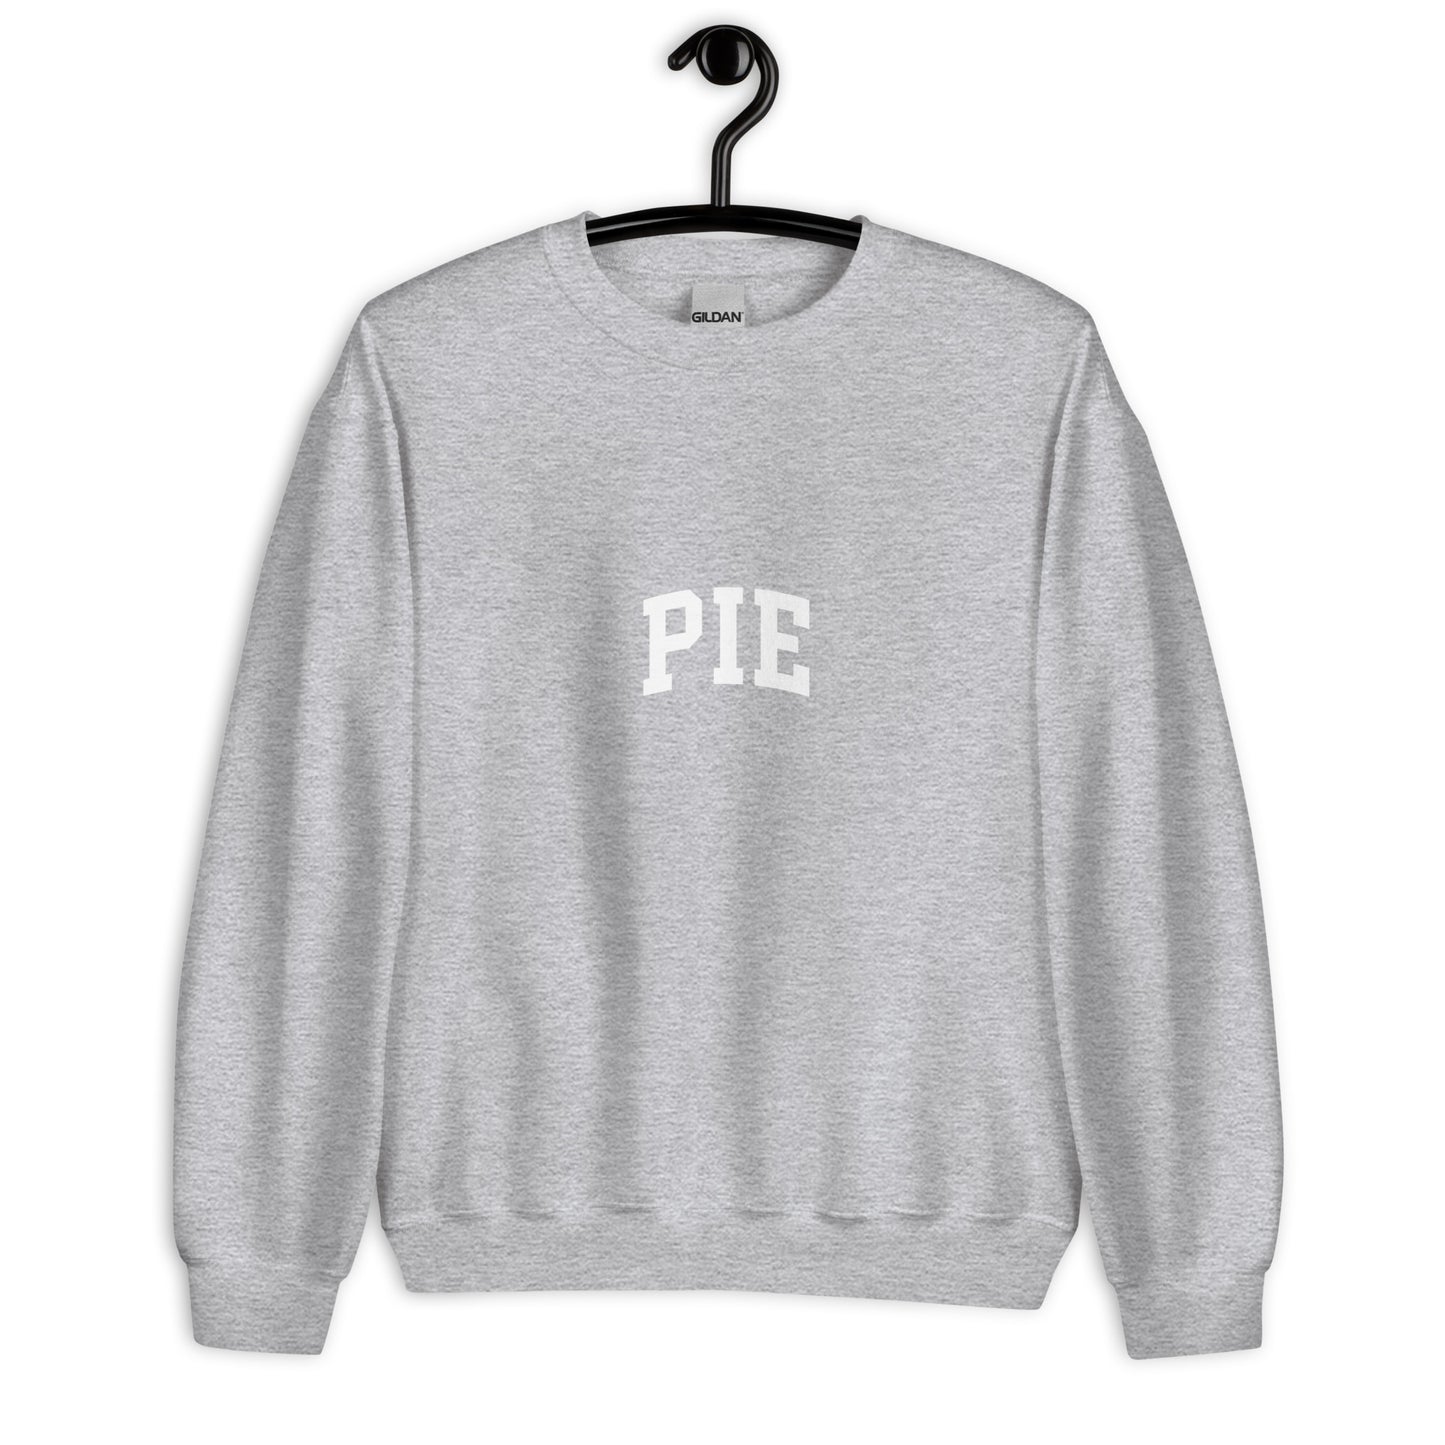 Pie Sweatshirt - Arched Font